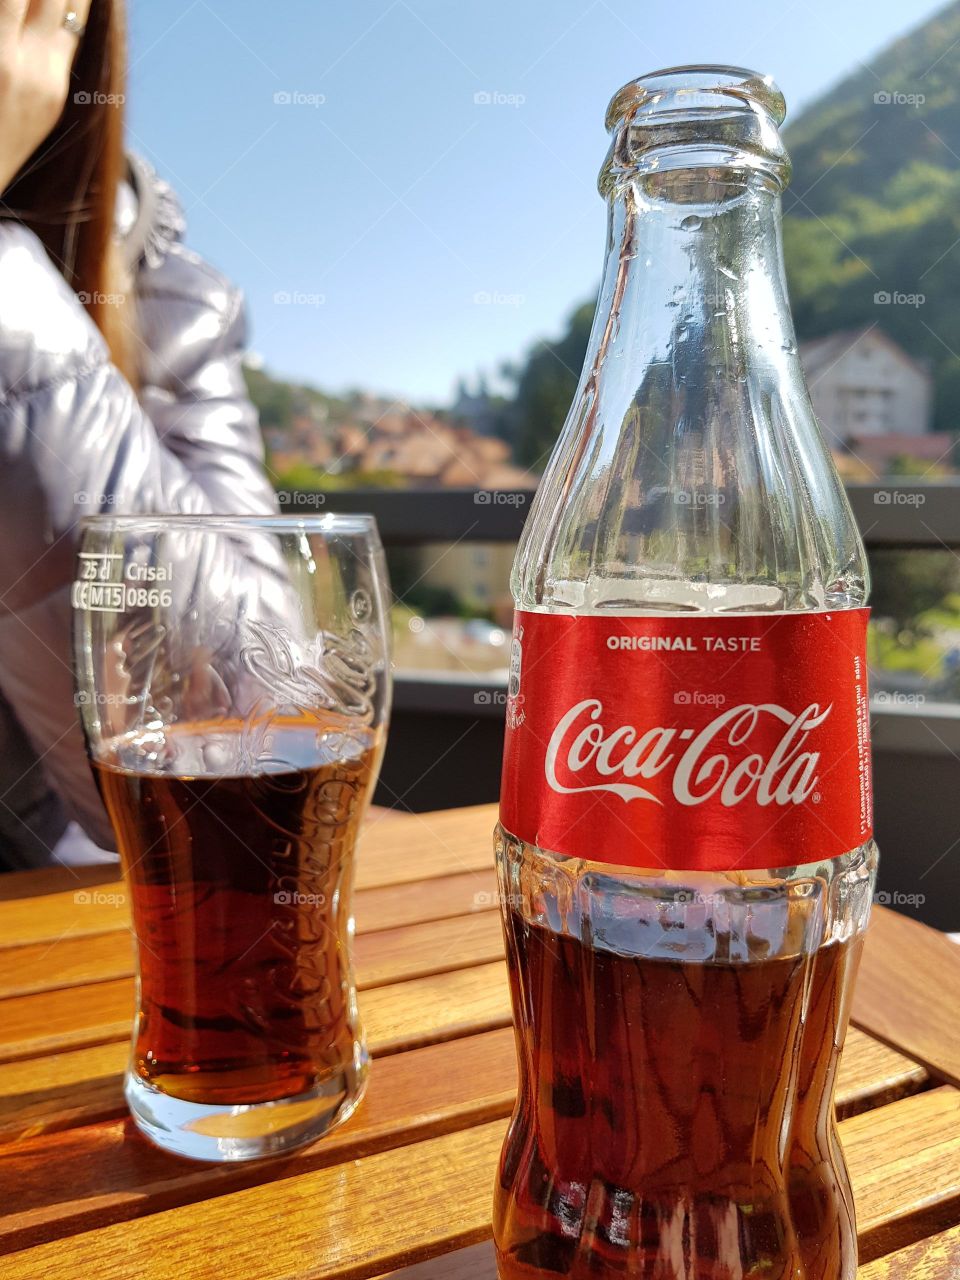 A coke is never a bad choice